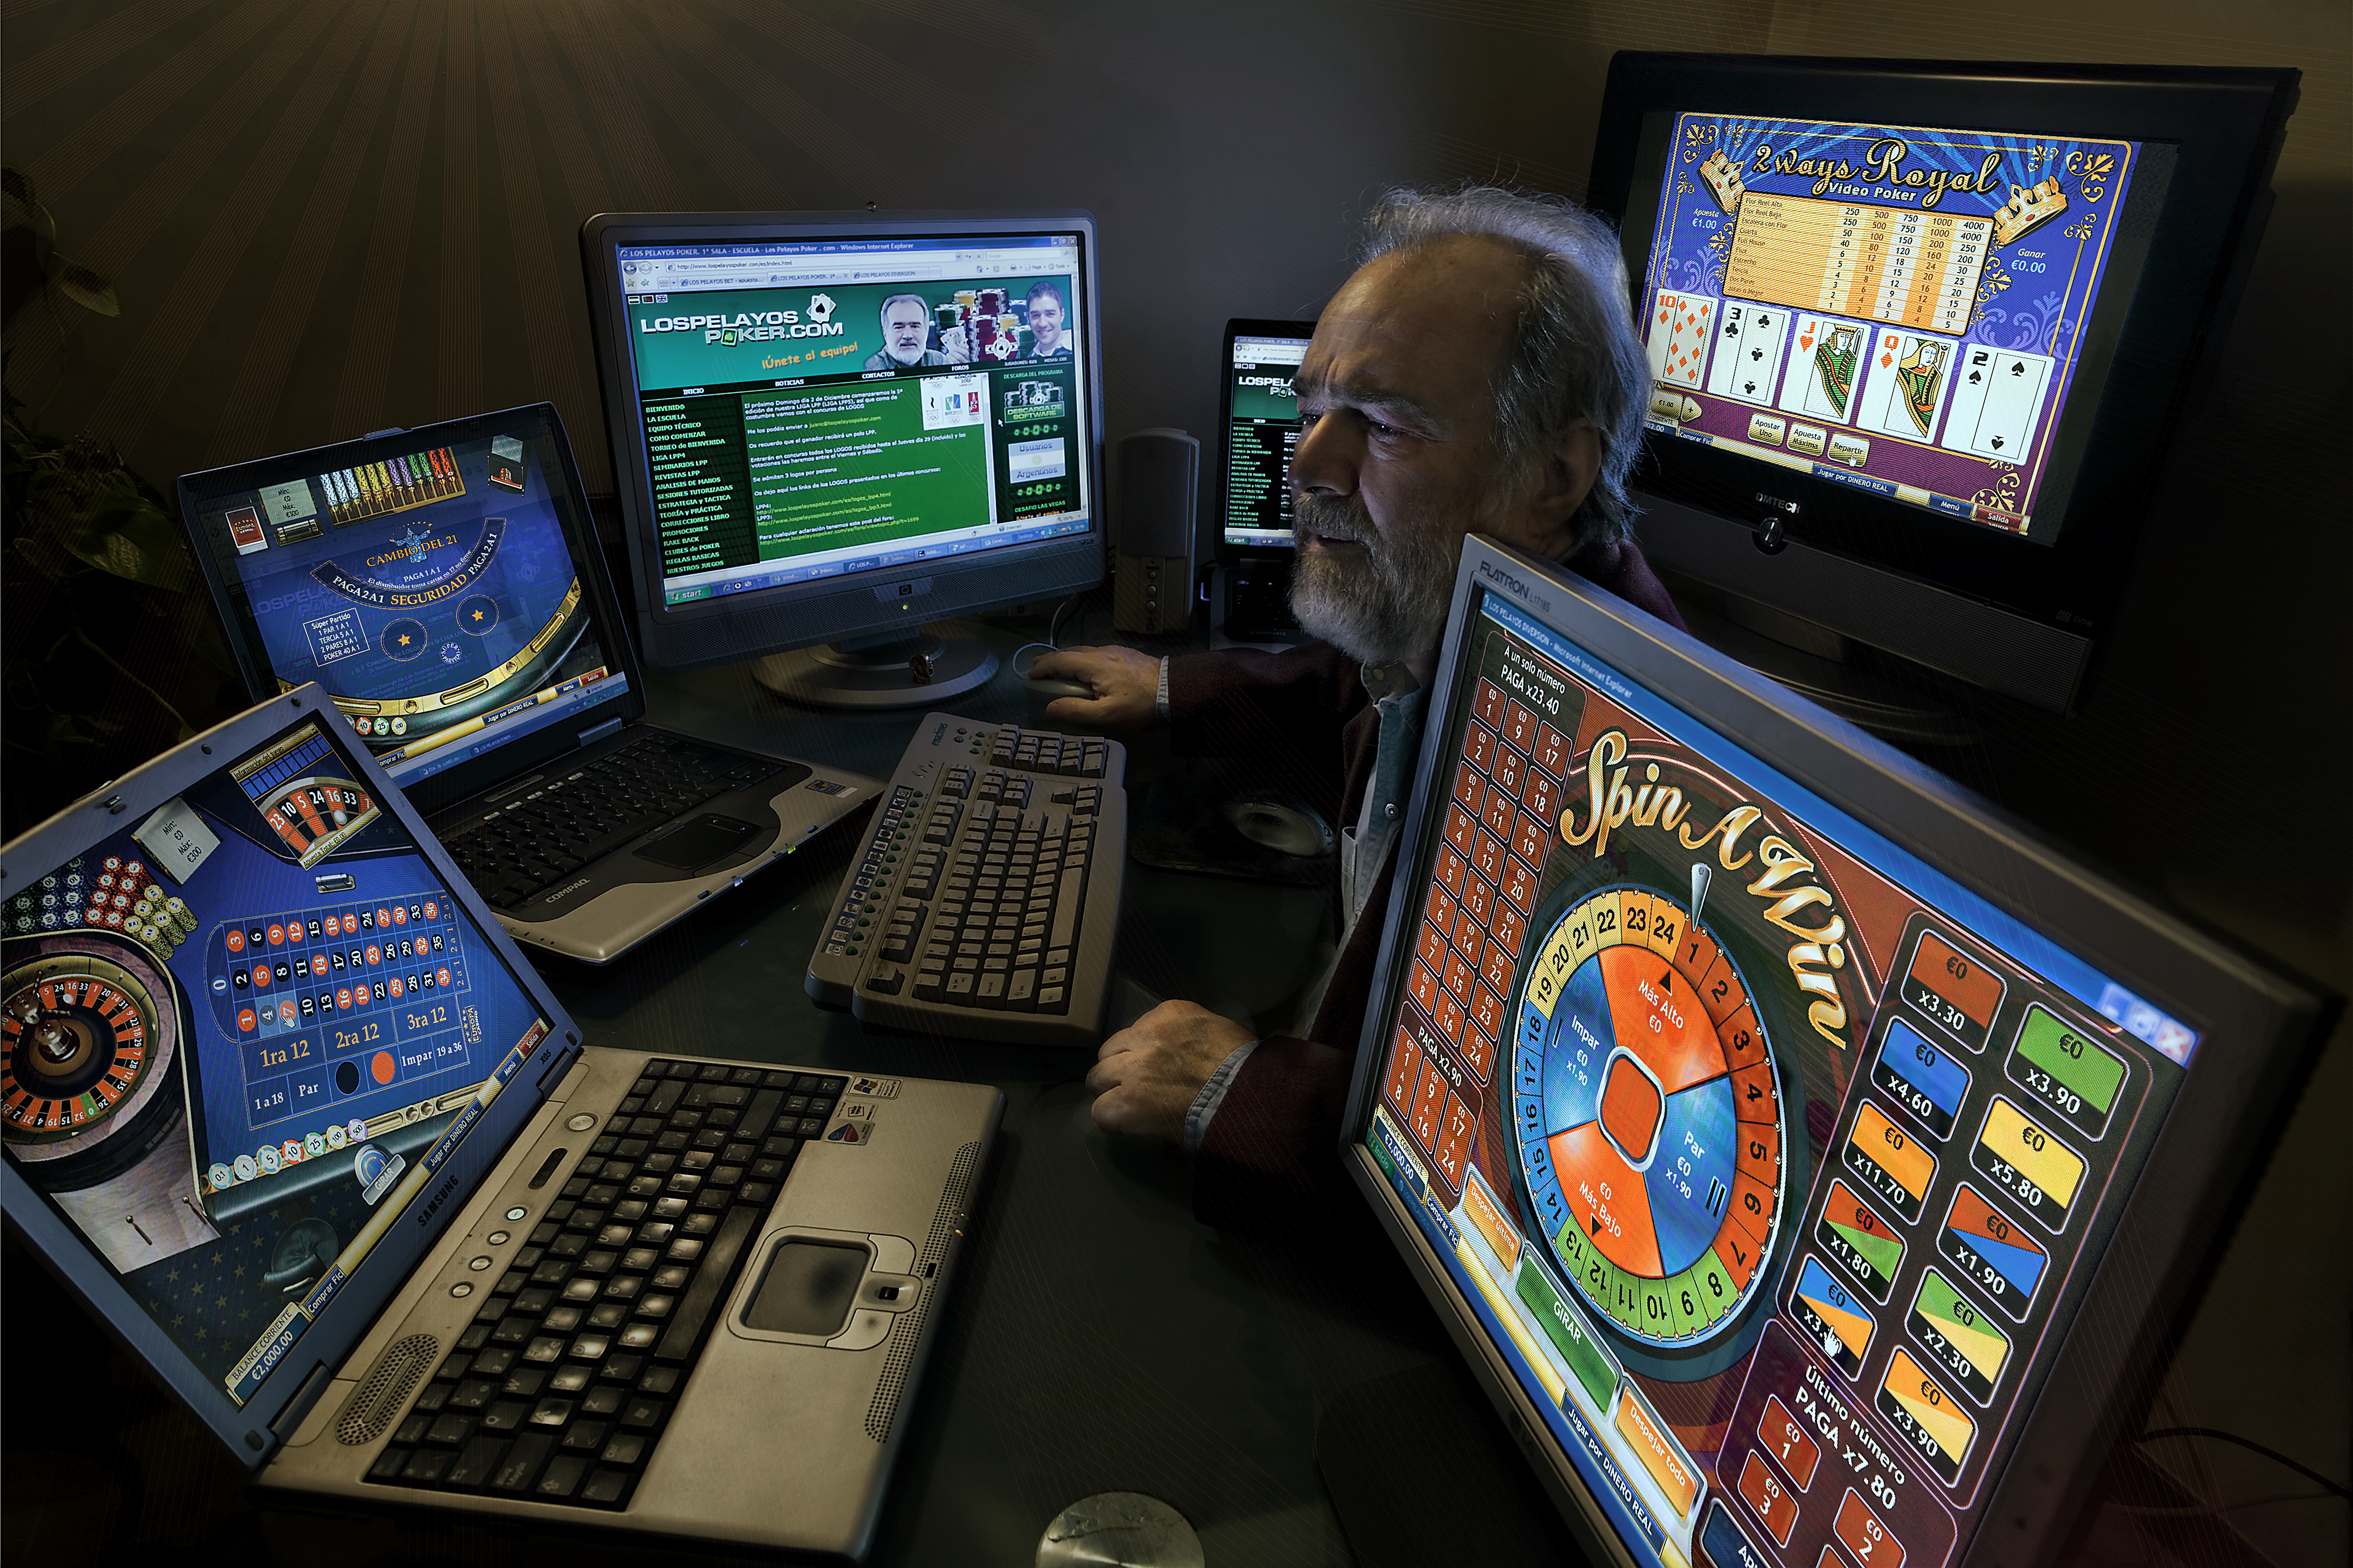 Online Casino Bingo Sites